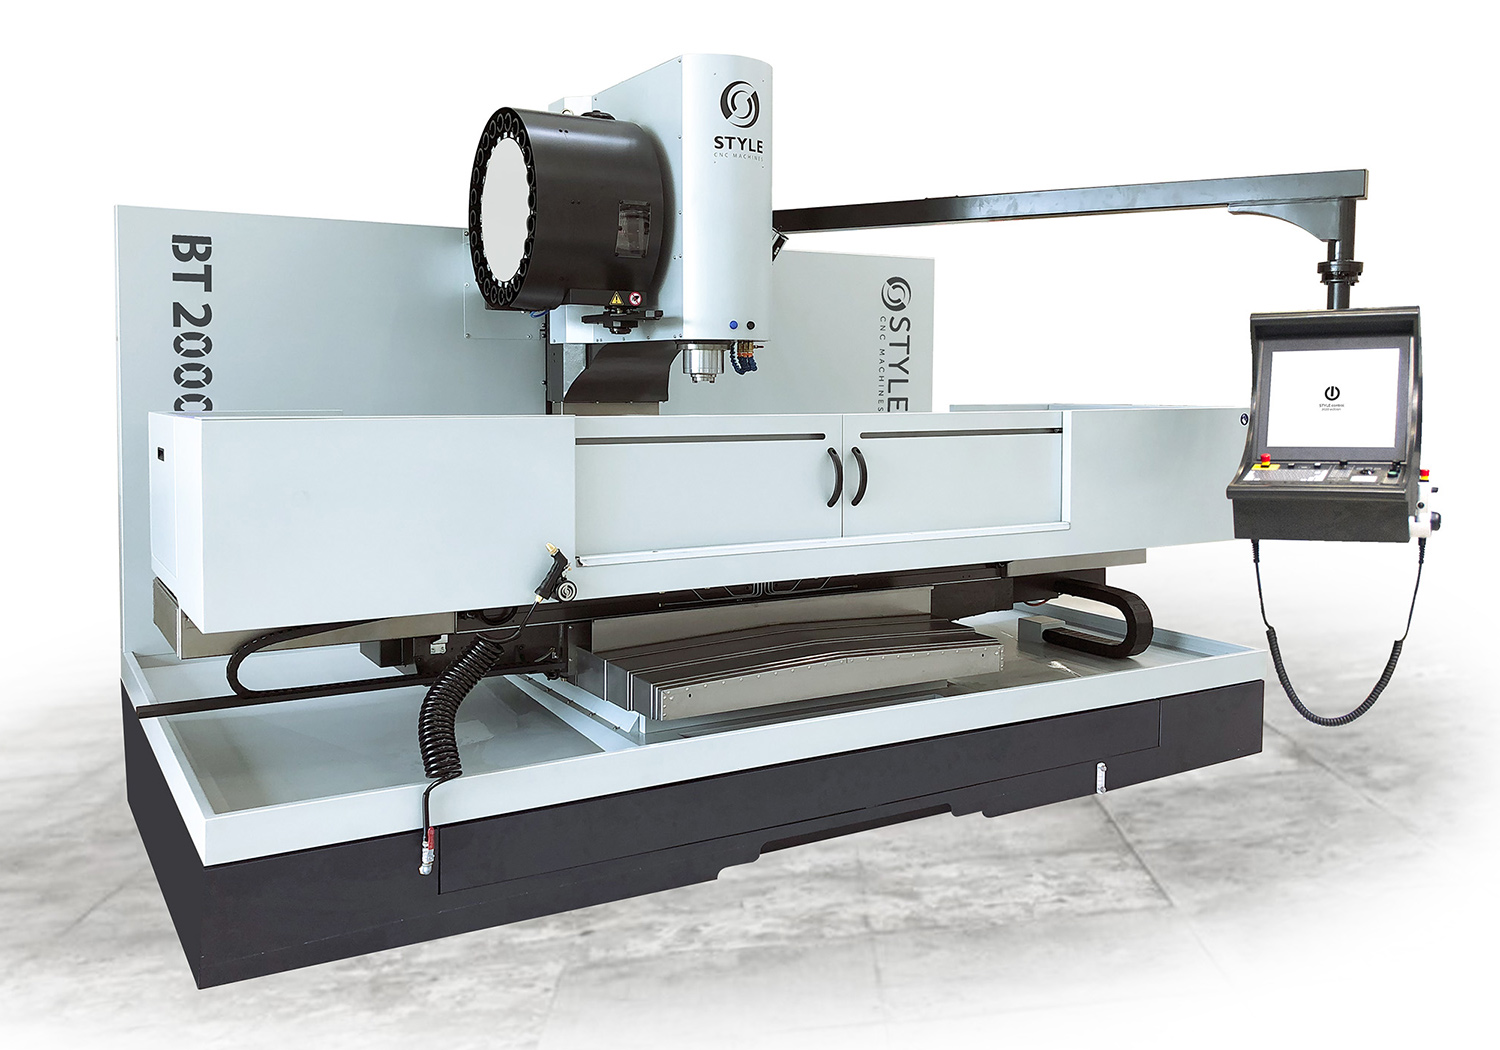 STYLE BT 2000 CNC milling machine